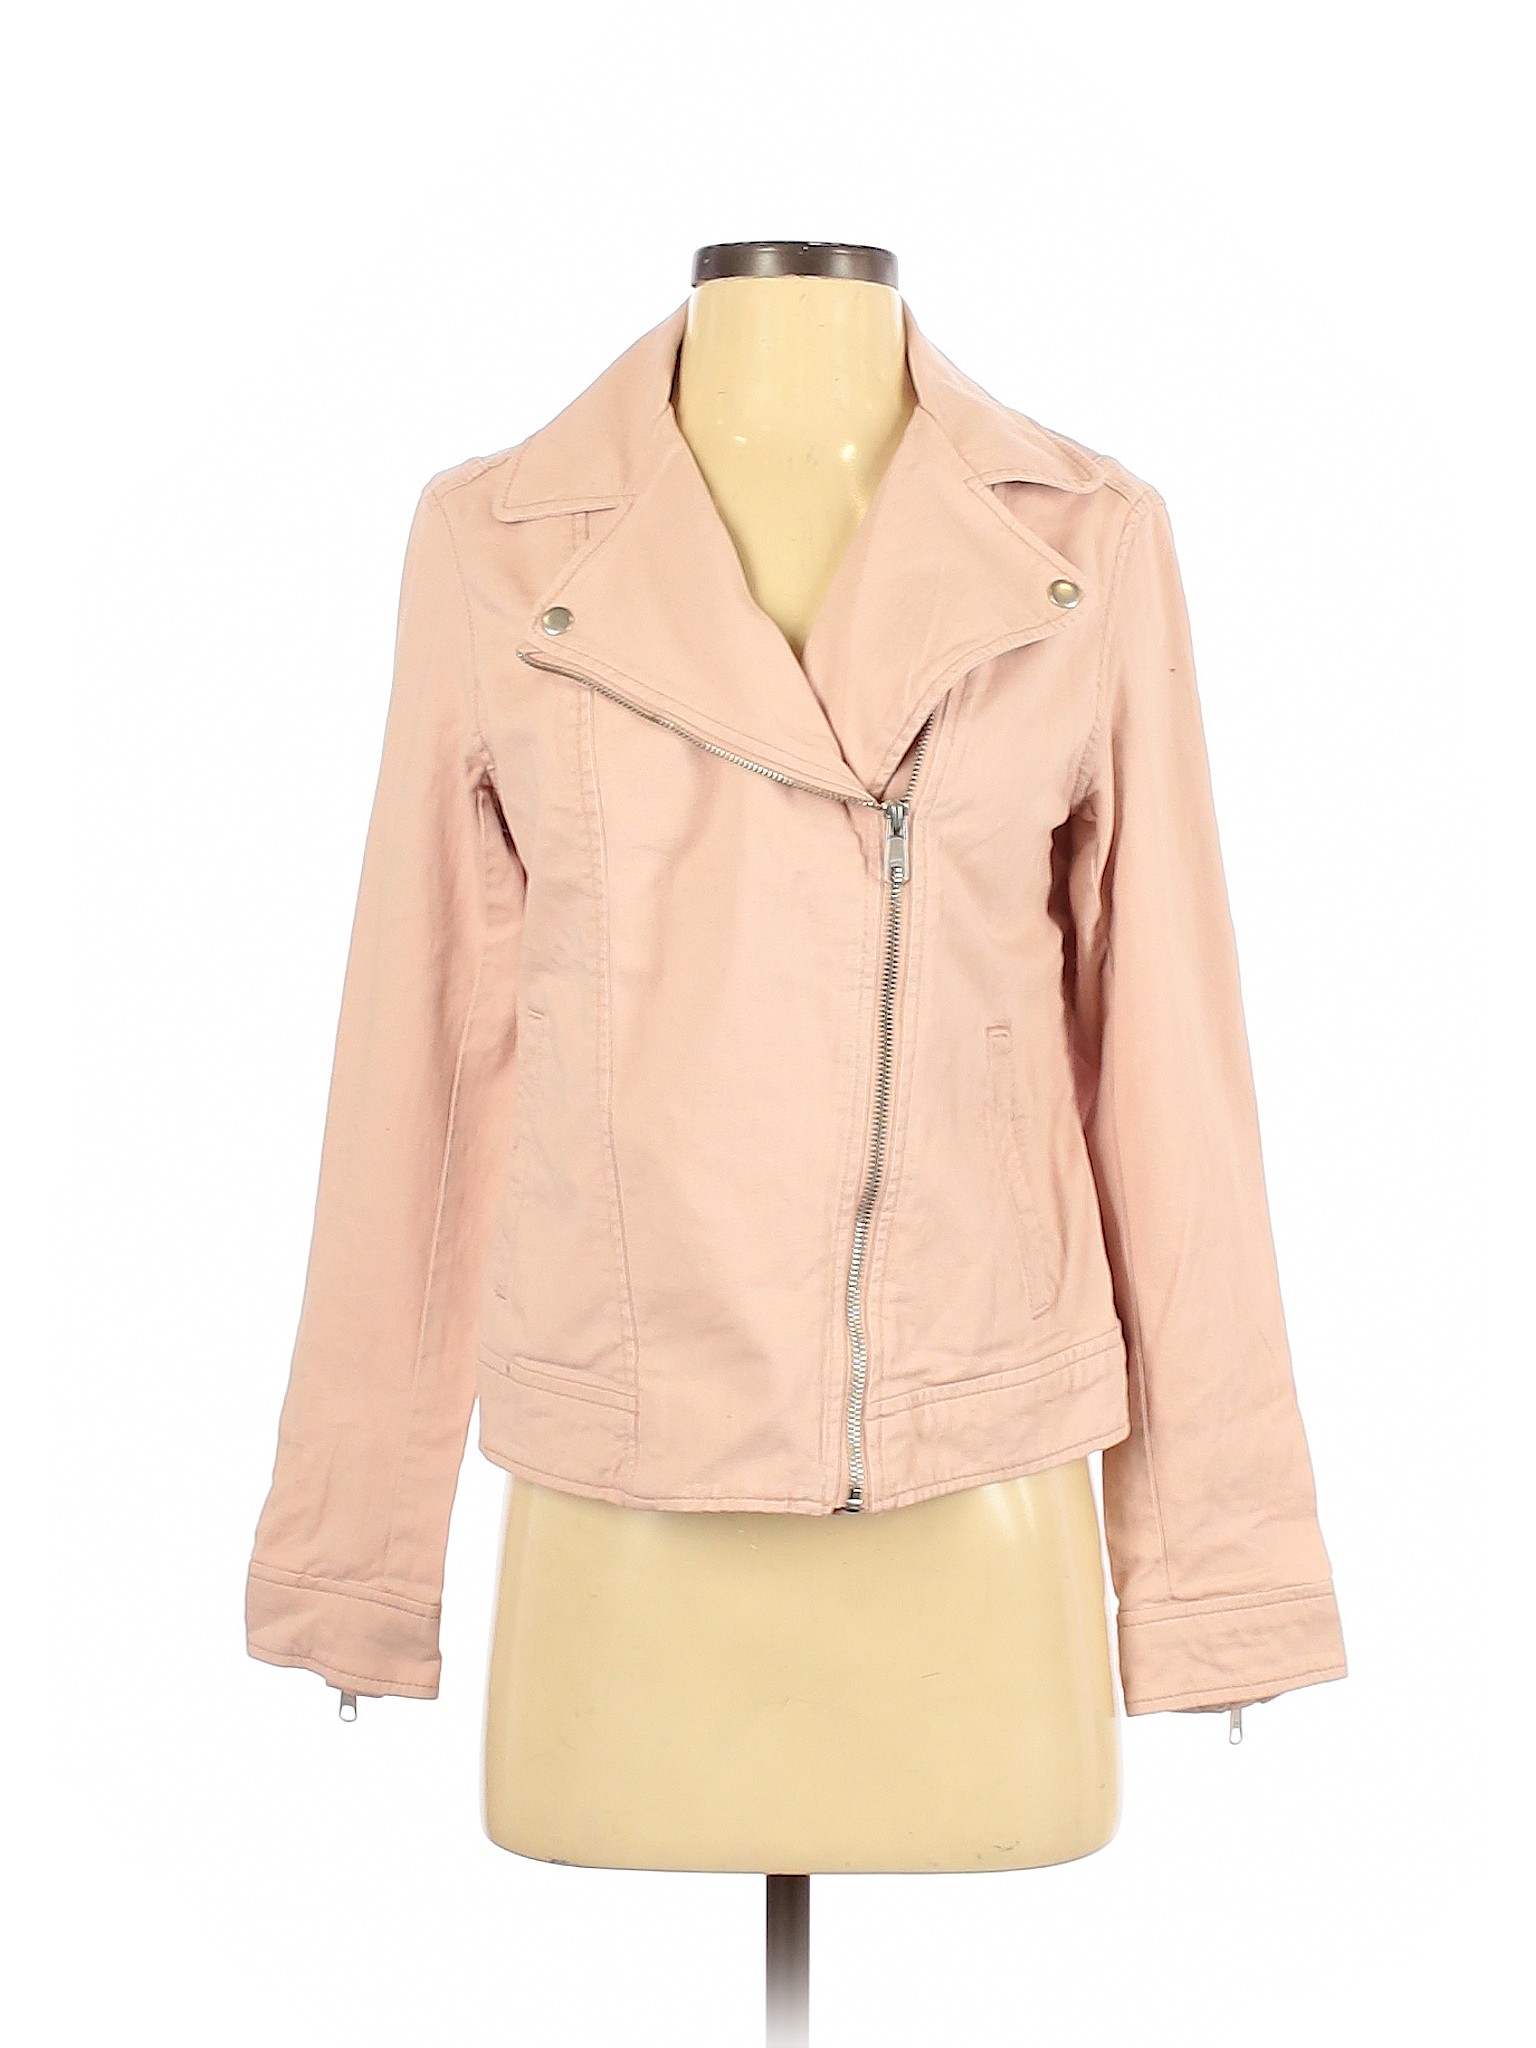 Old Navy Women Pink Jacket S | eBay